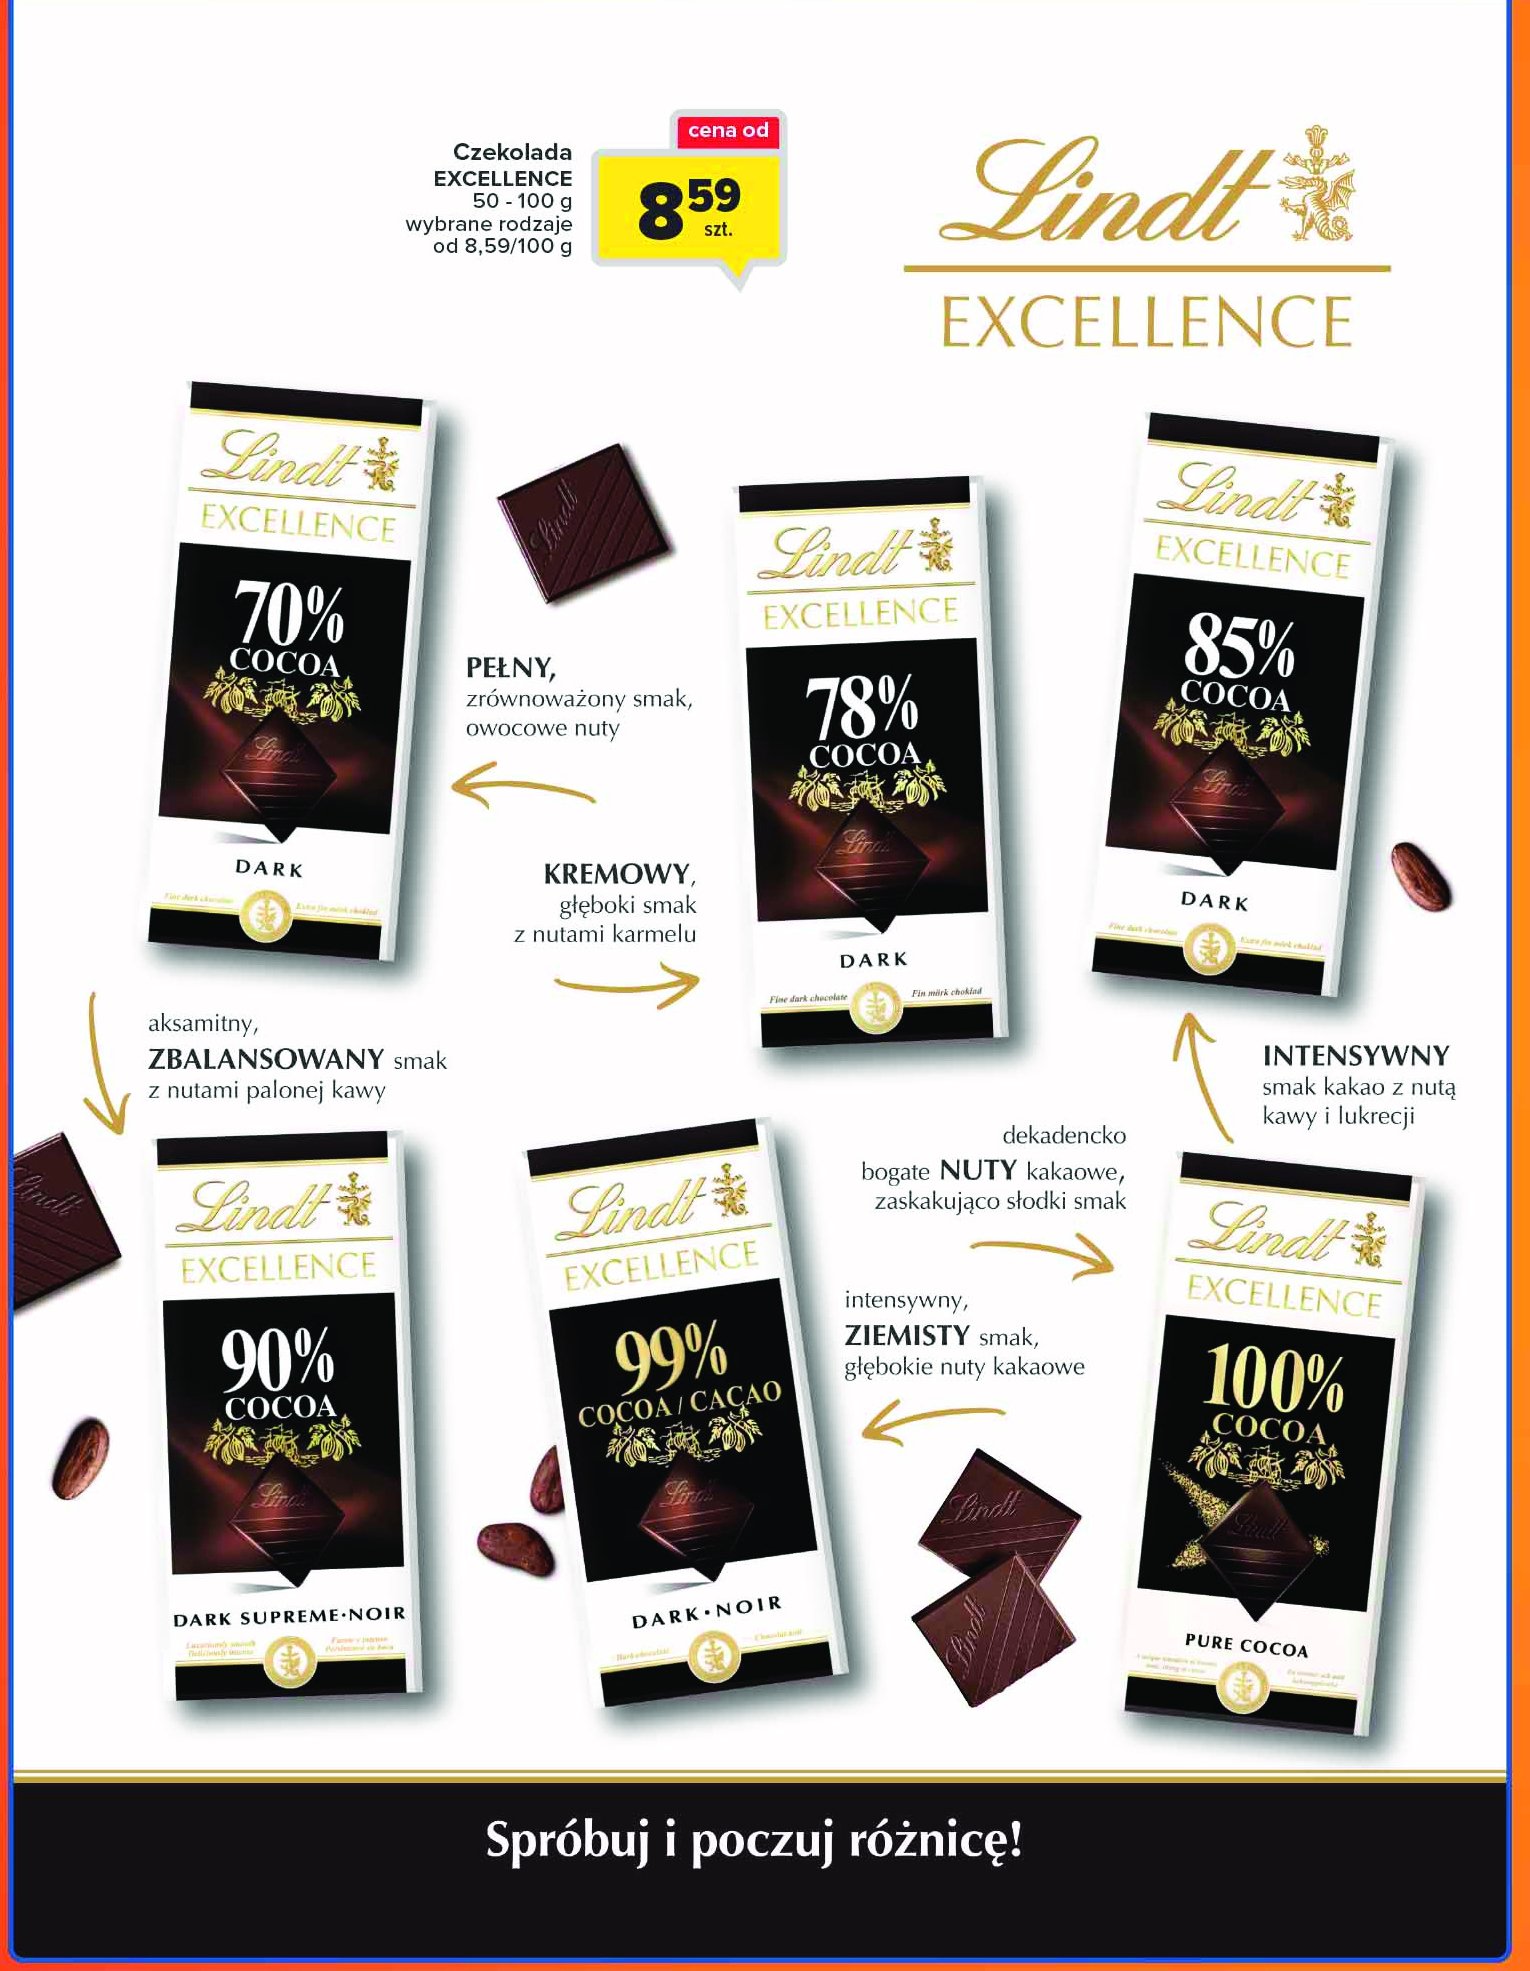 Czekolada 90 % cocoa Lindt excellence promocja